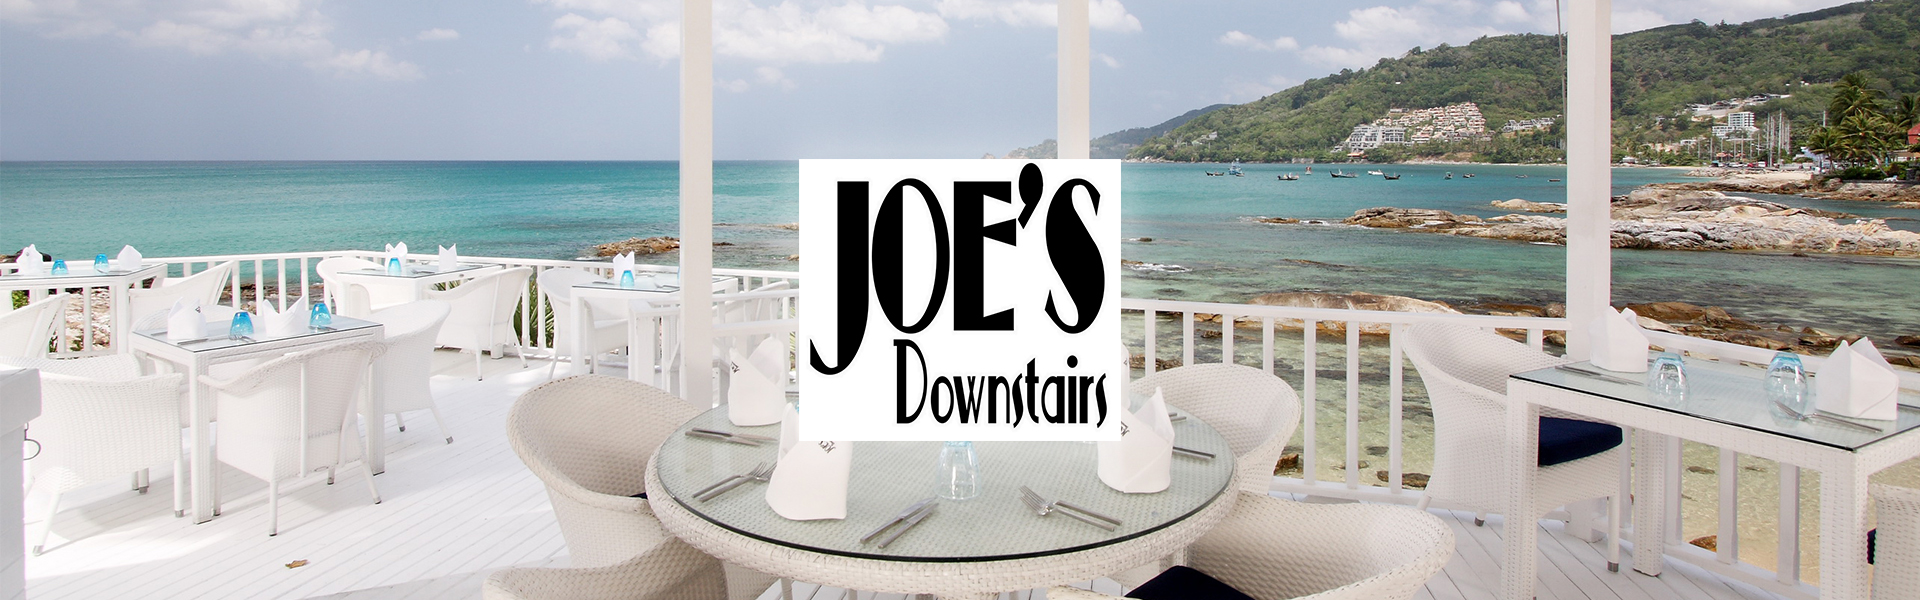 Joe's Downstairs